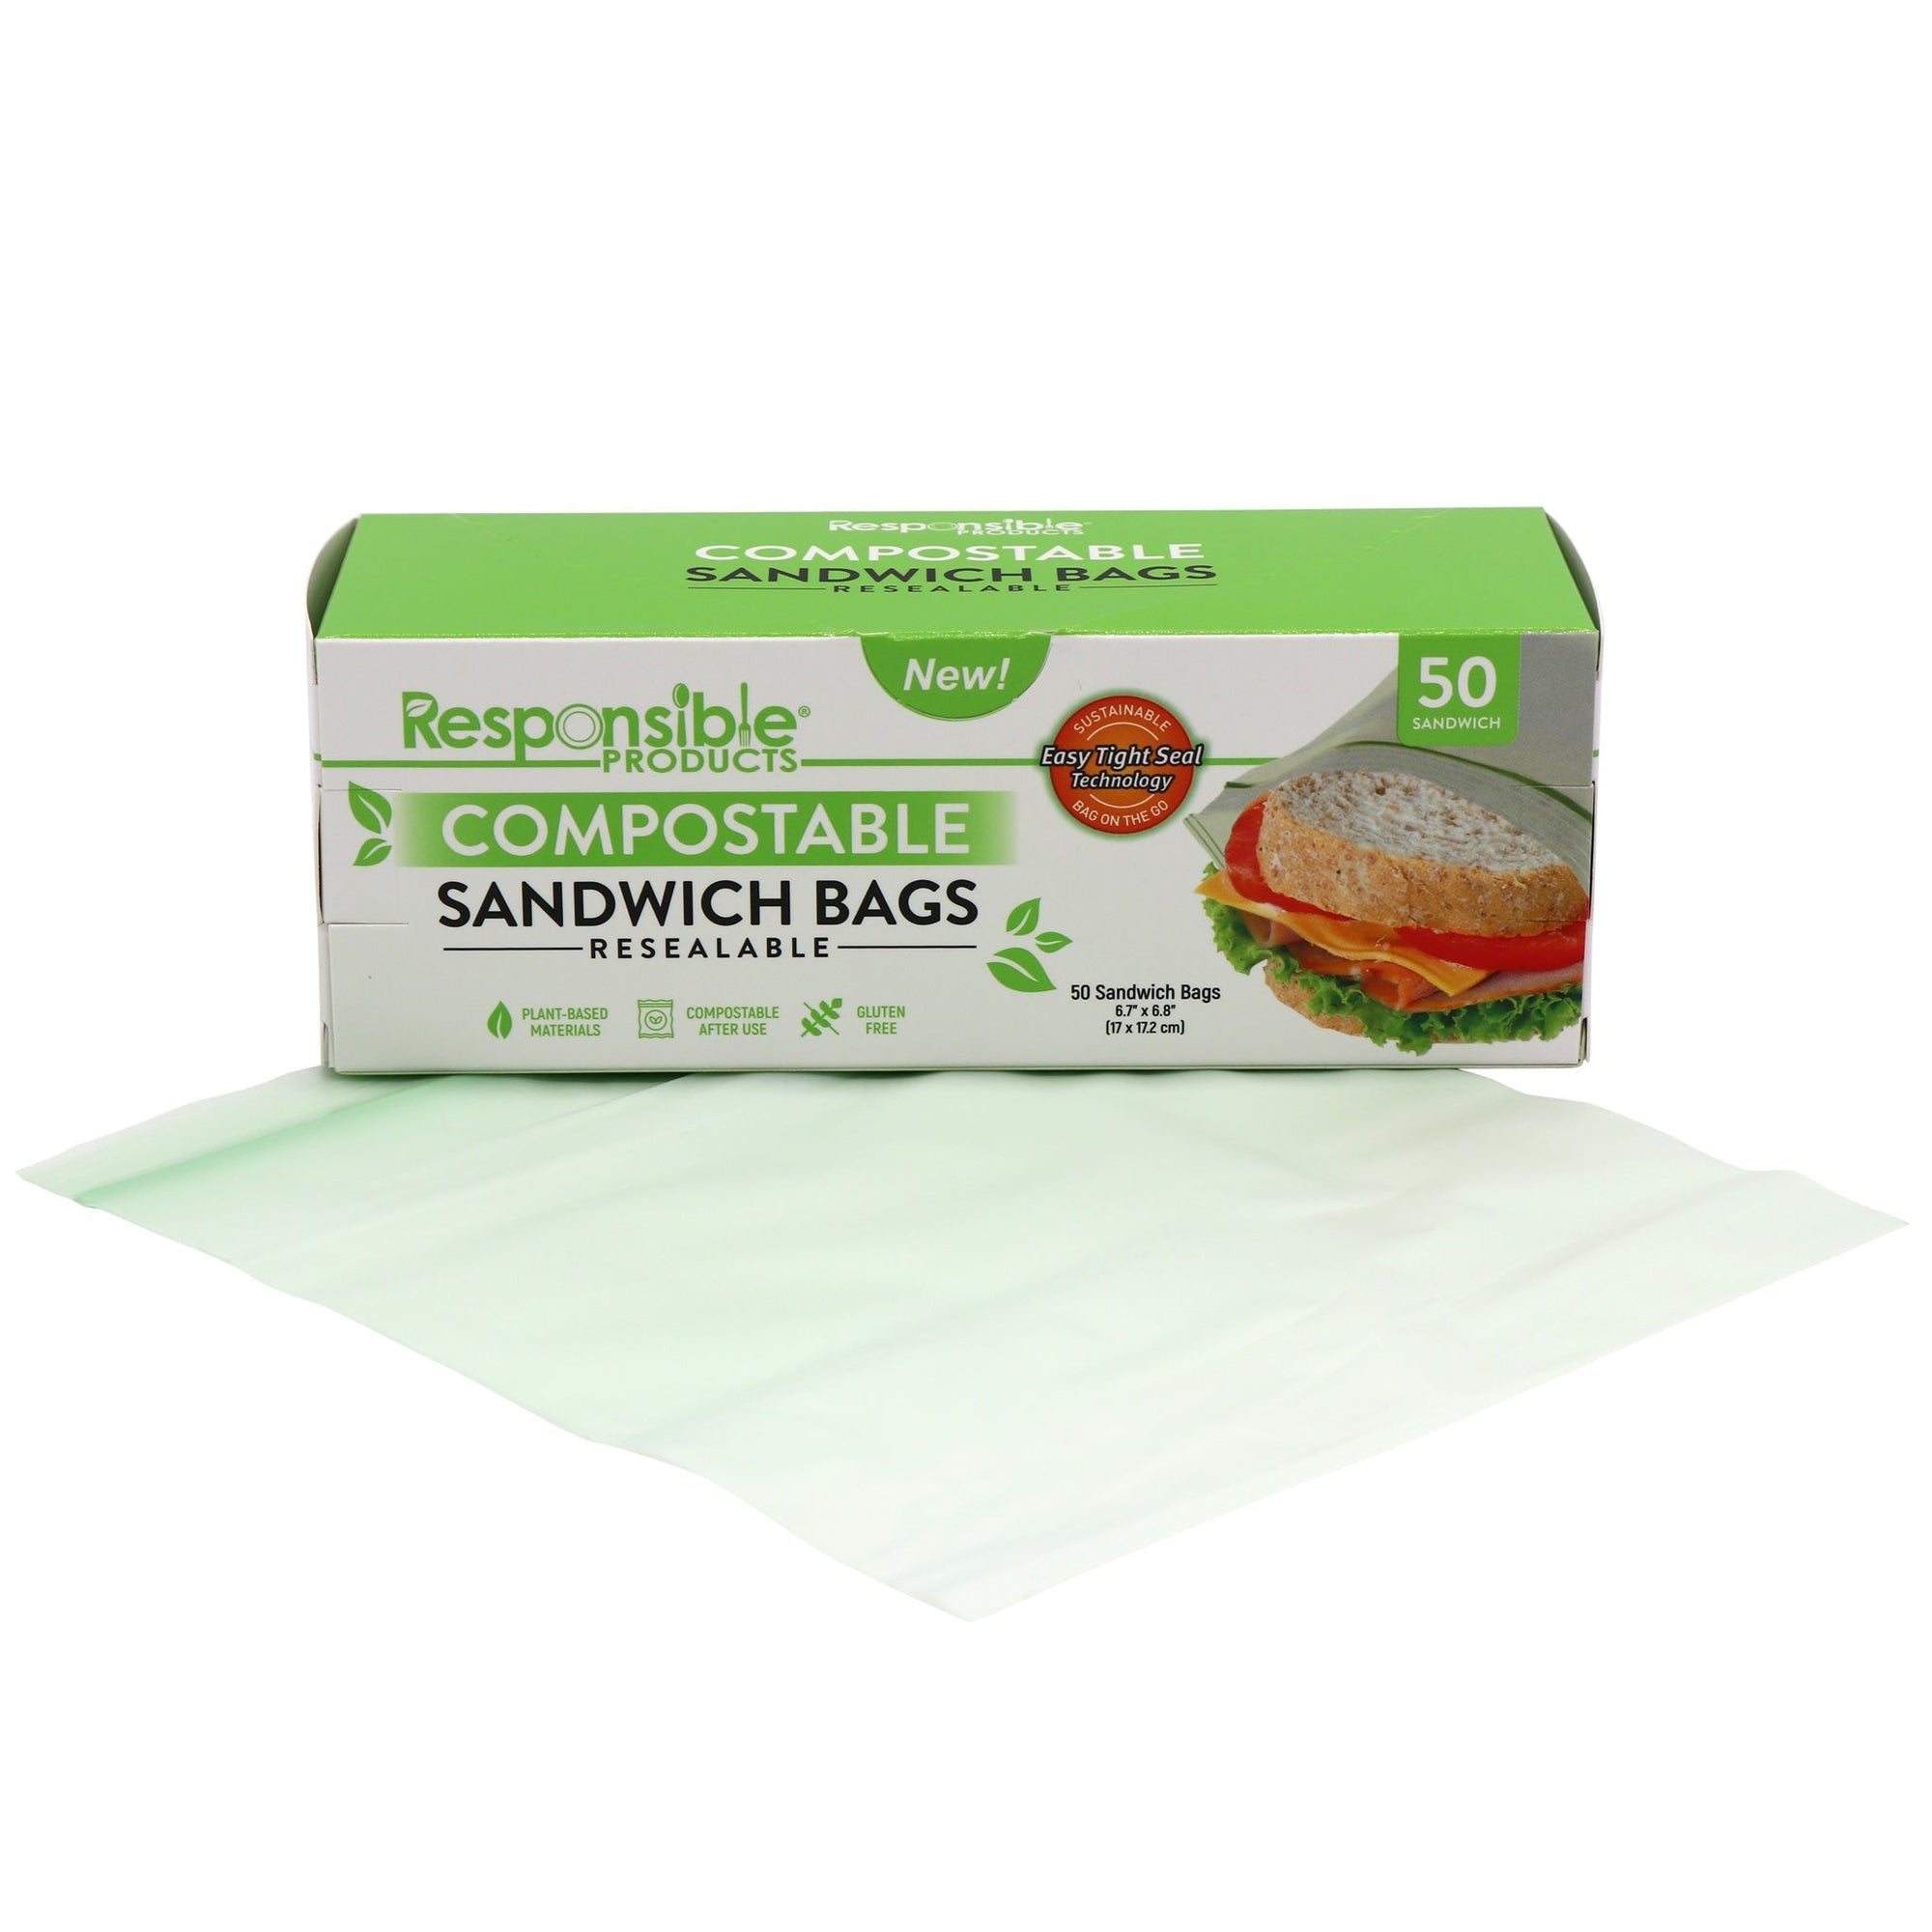 SANDWICH BAGS – Lunchskins